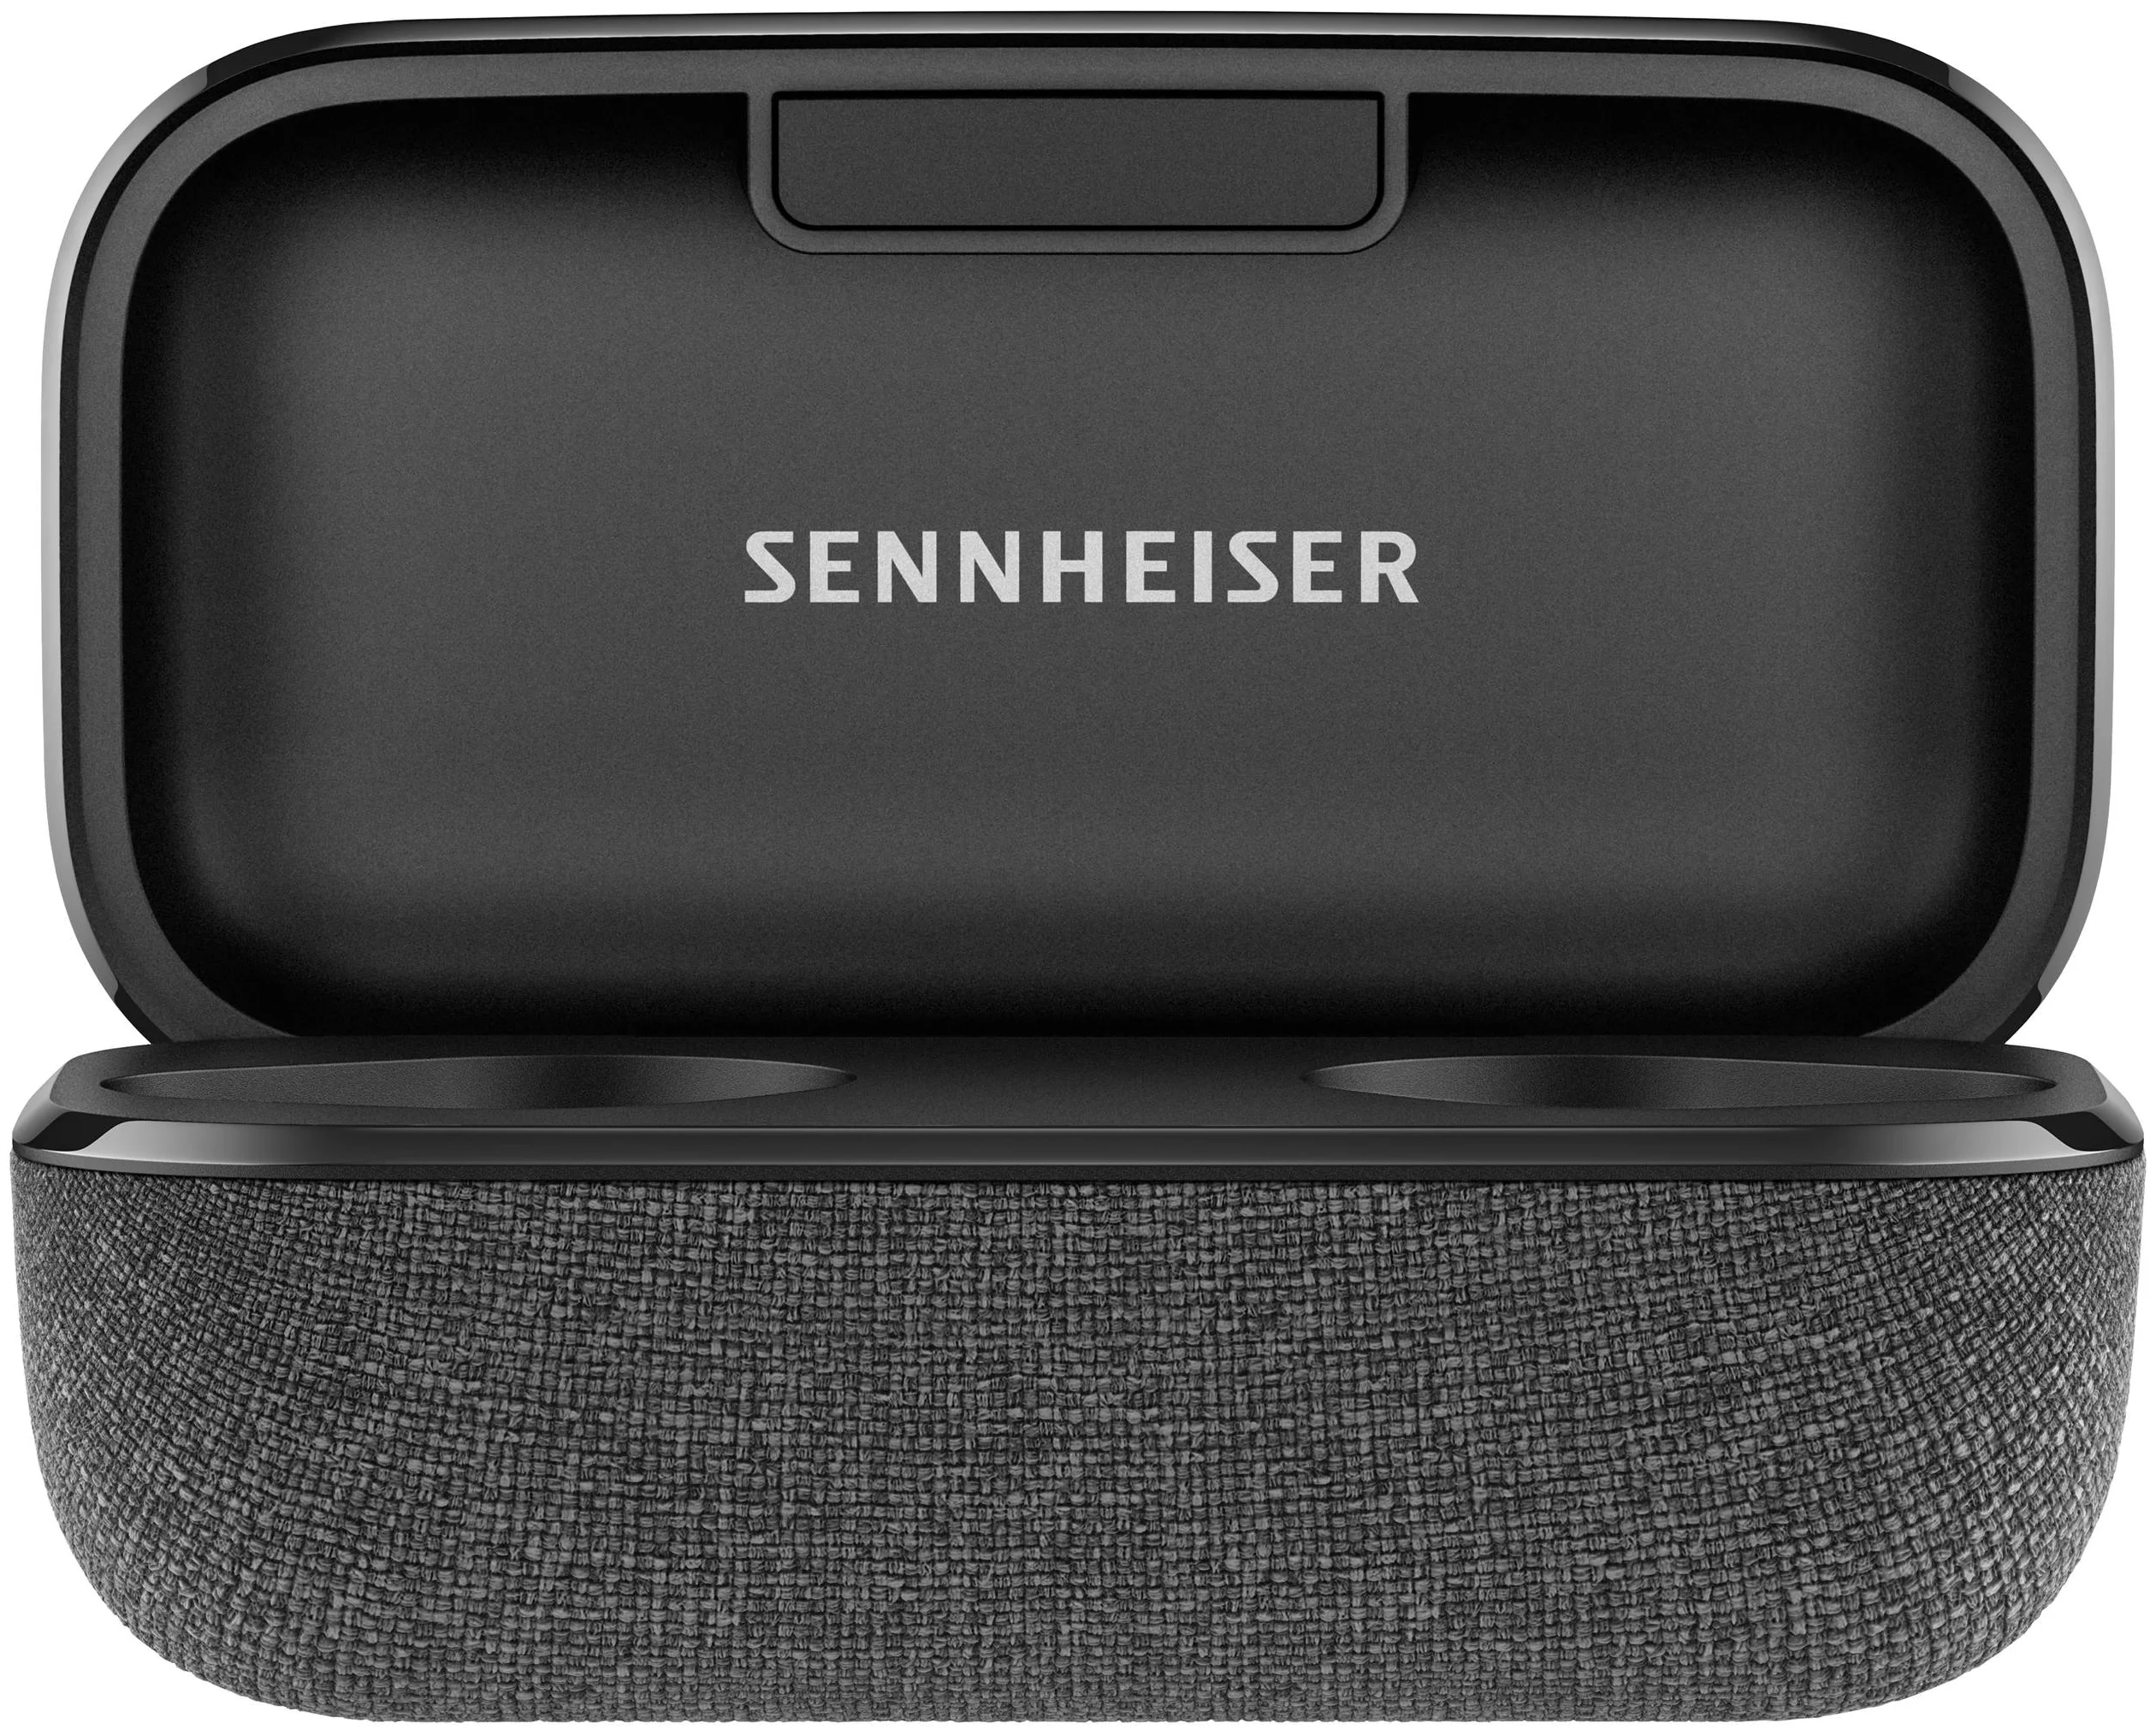 Sennheiser Momentum True Wireless 2 - тип излучателей: динамические